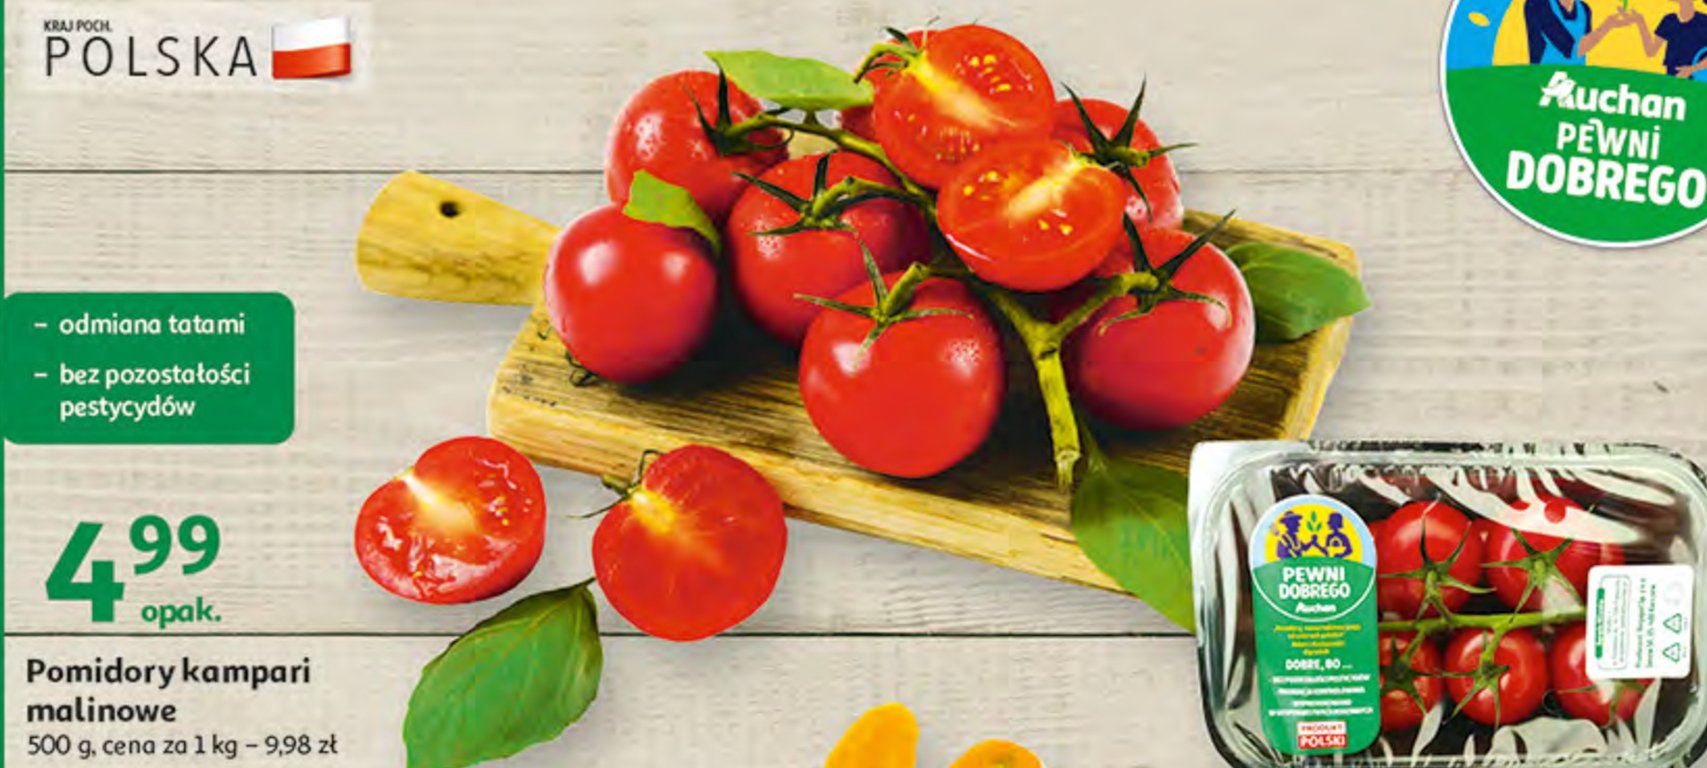 Pomidory campari malinowe Auchan pewni dobrego promocje